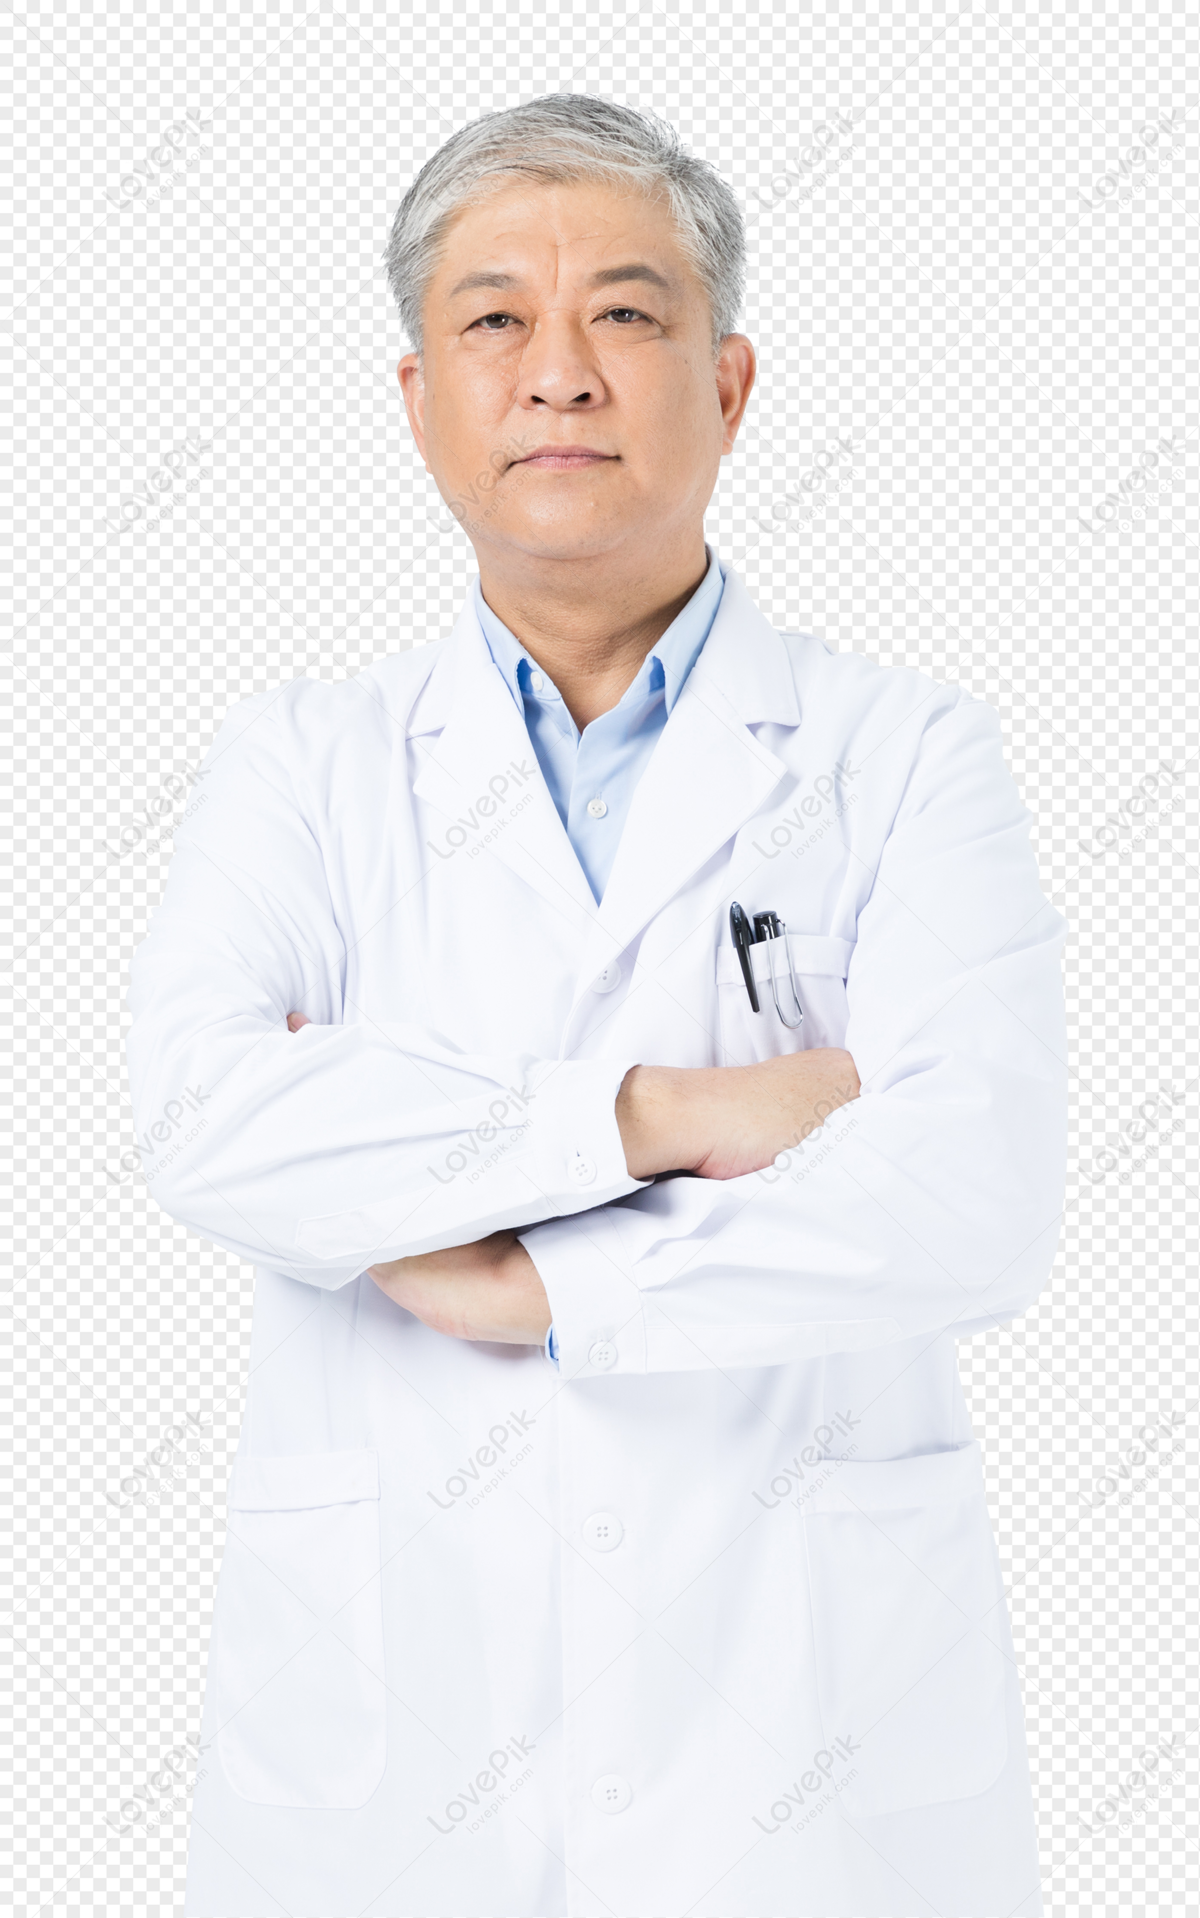 lovepik-image-of-elderly-male-doctors-png-image_400731300_wh1200